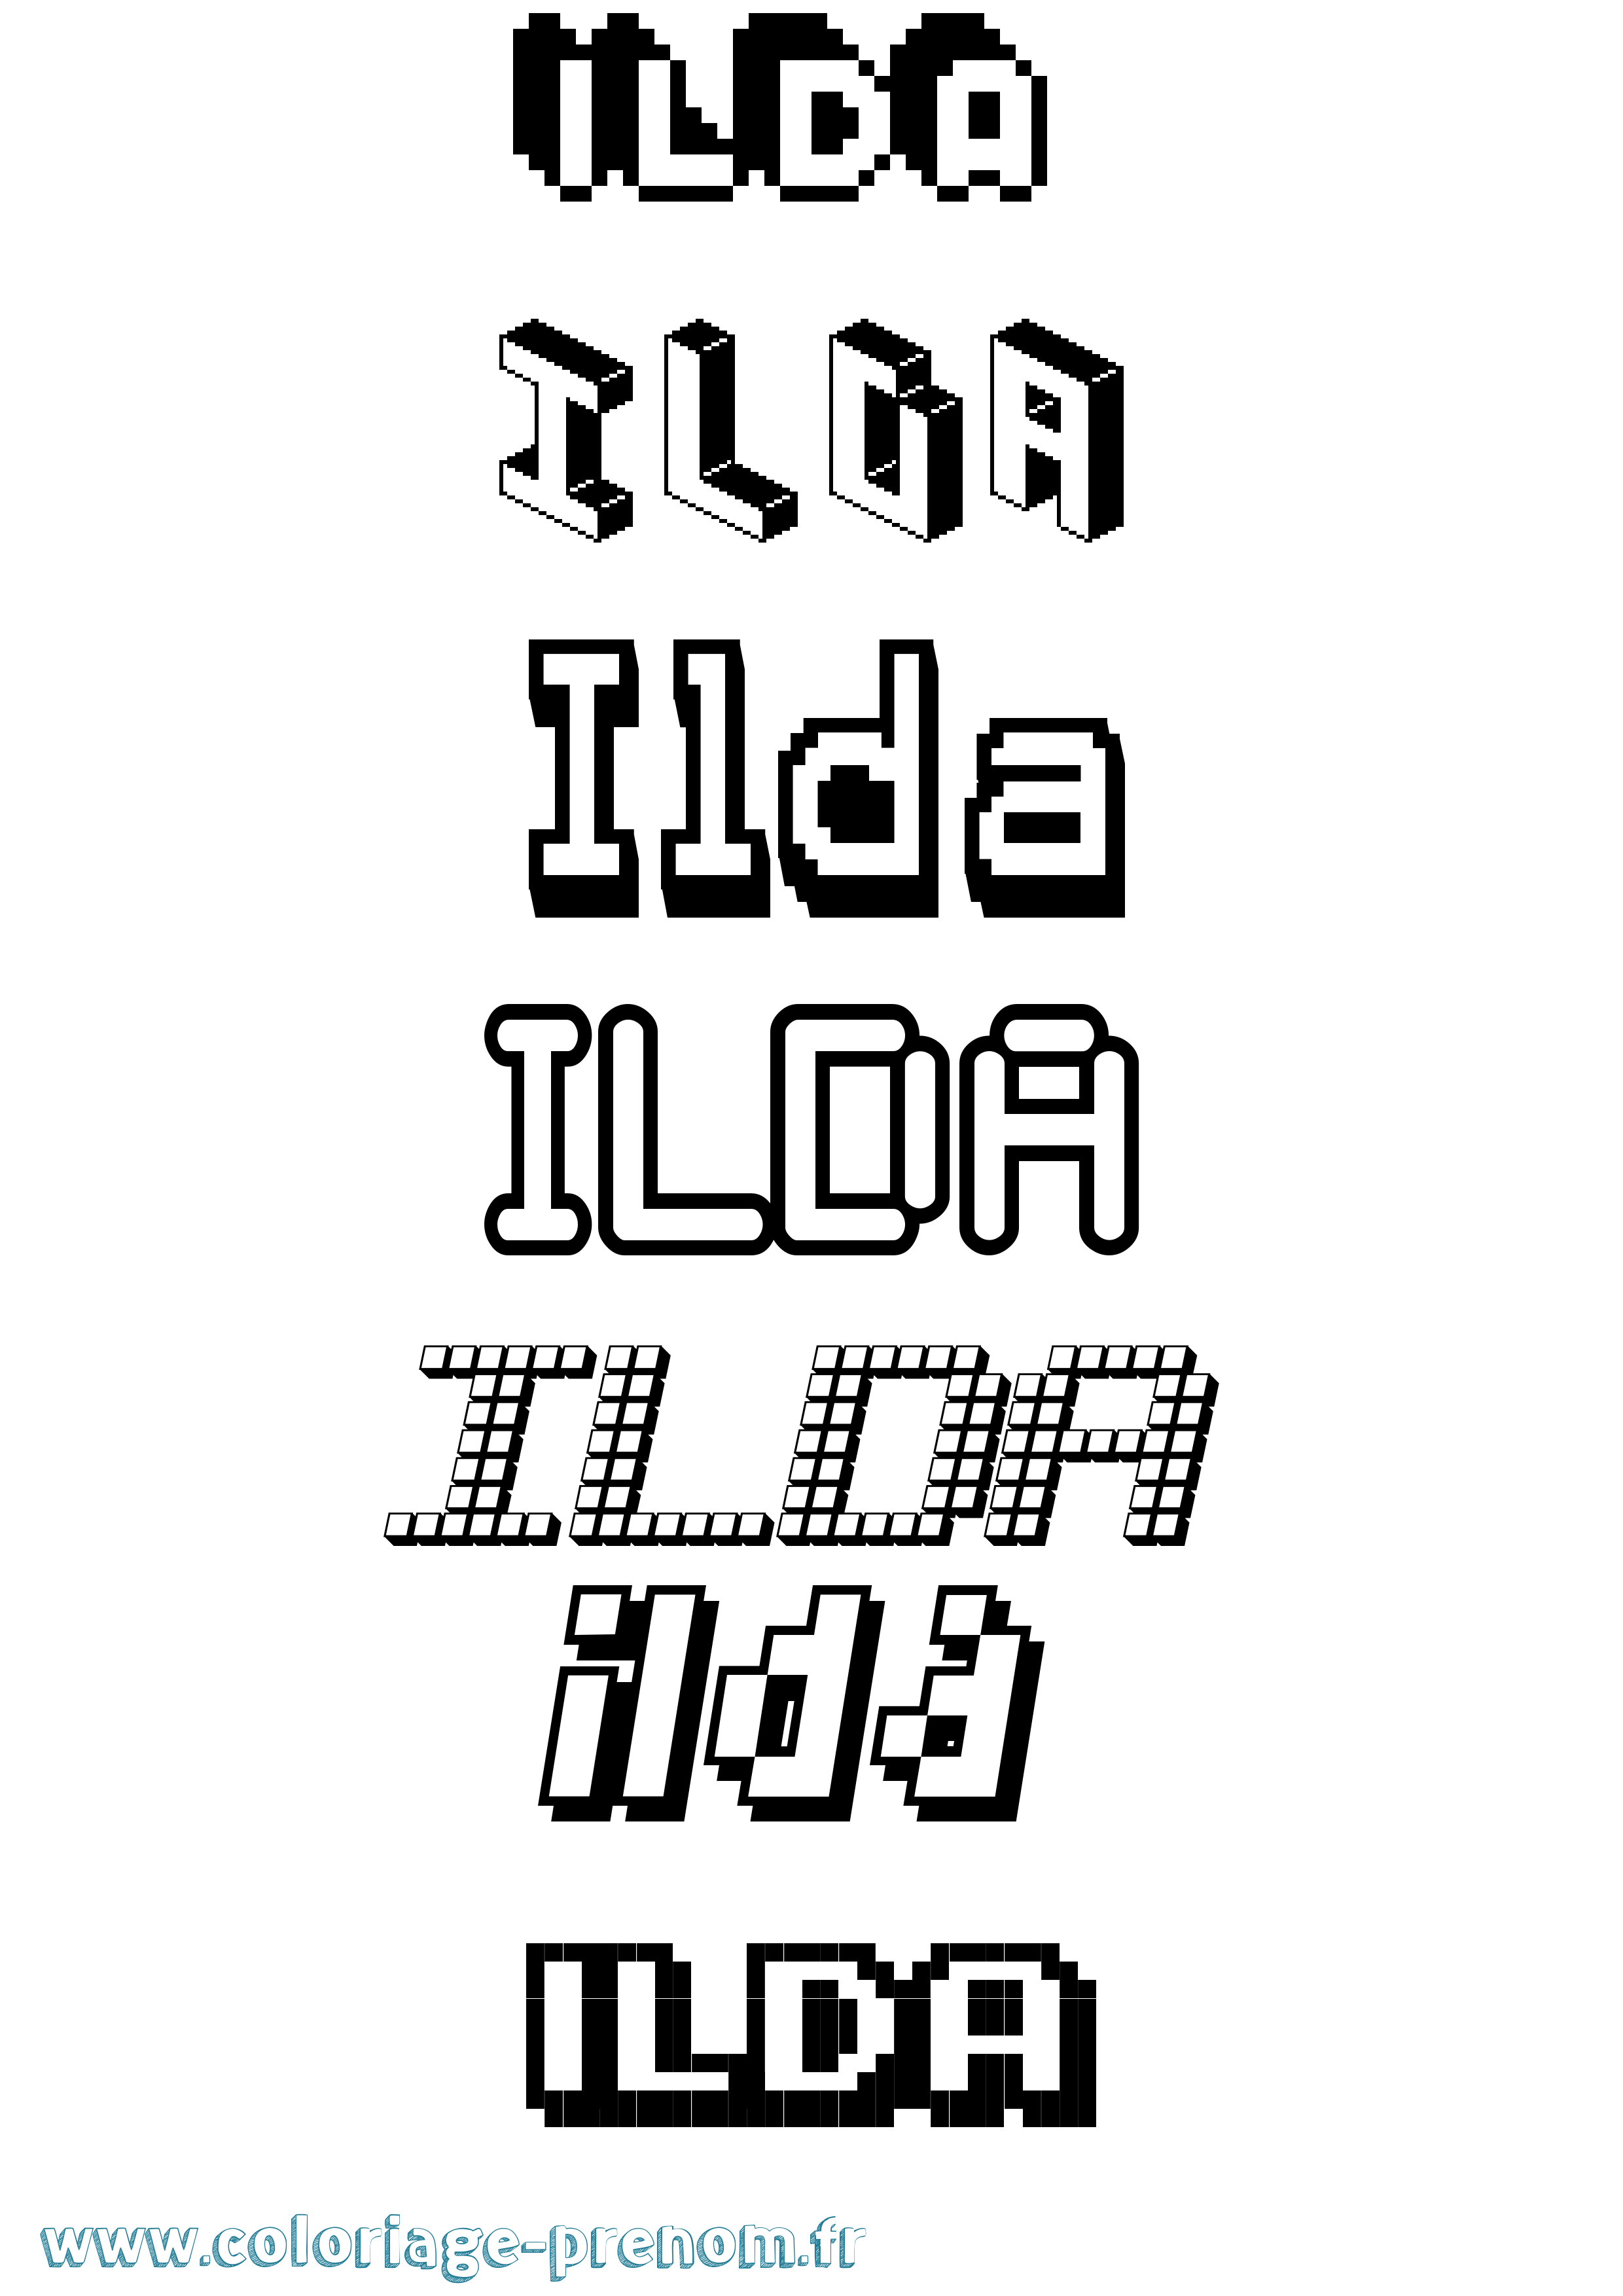 Coloriage prénom Ilda Pixel